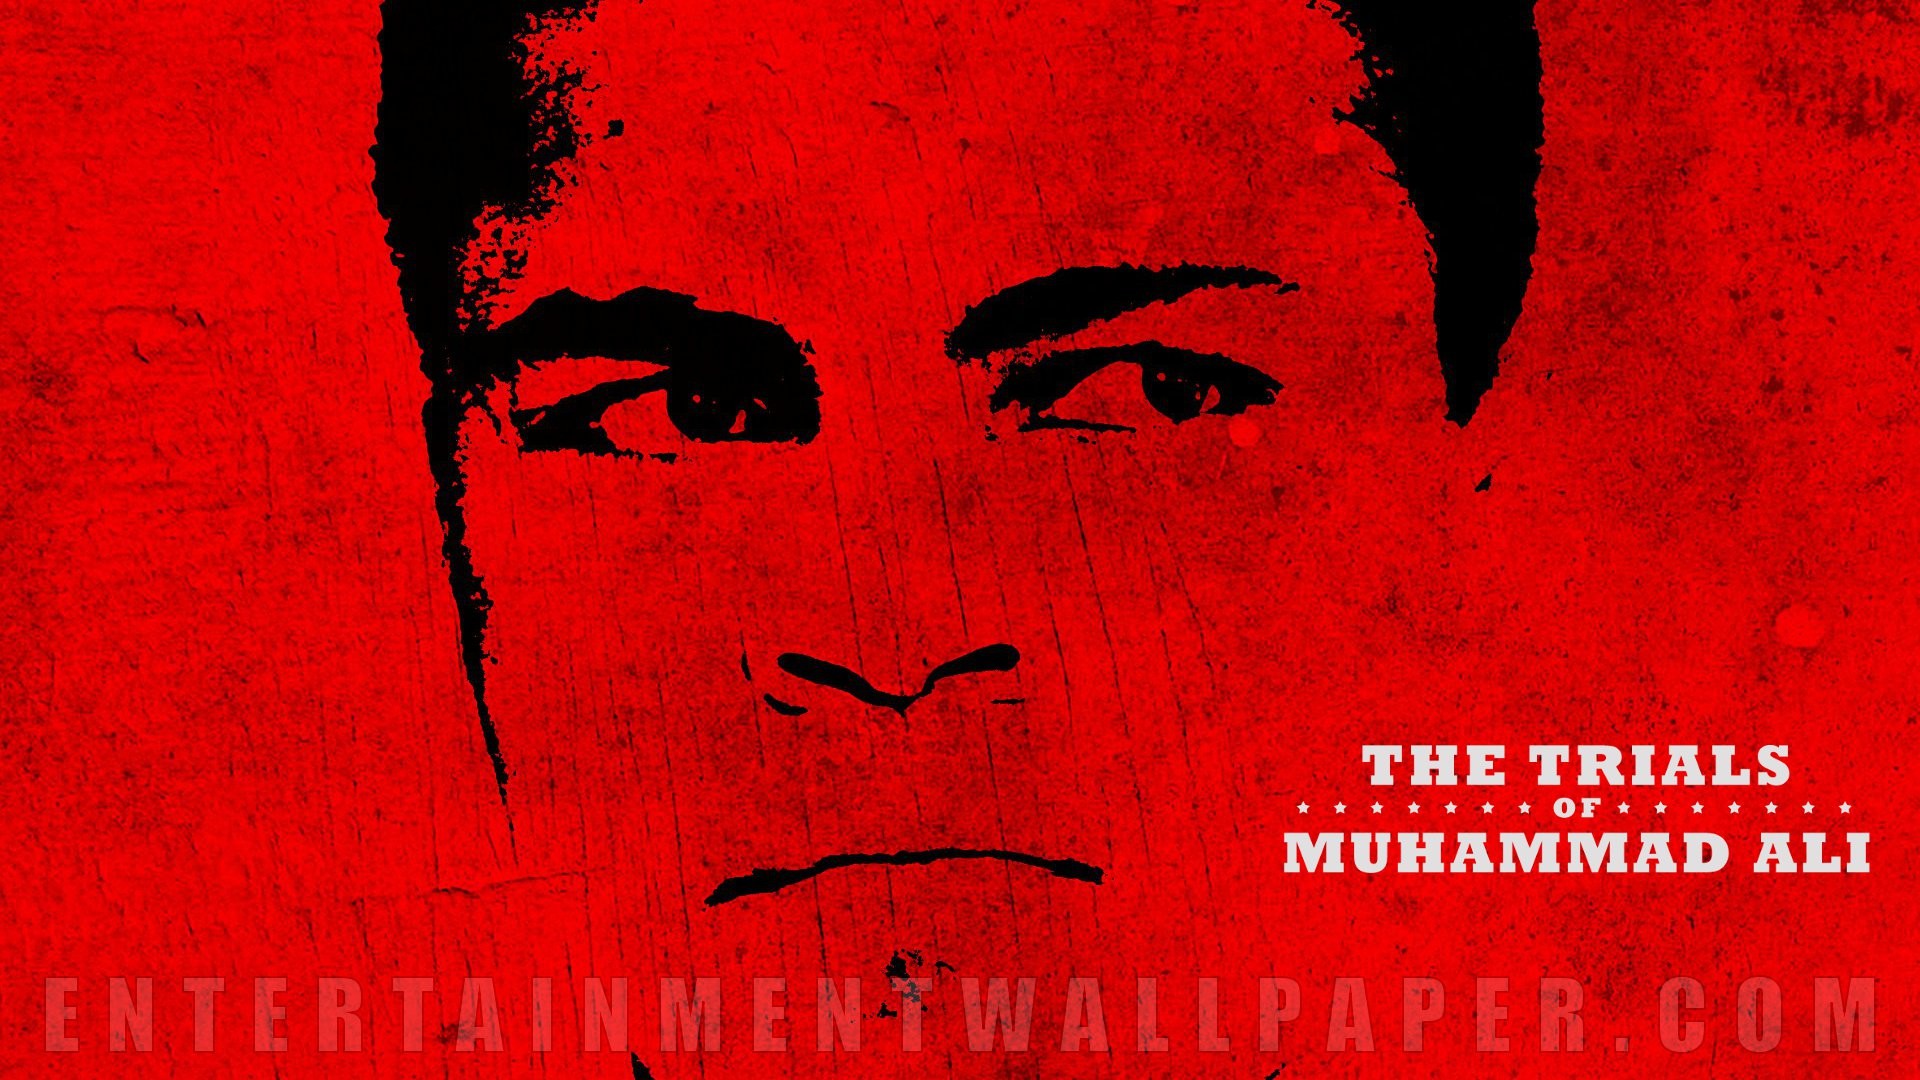 The Trials of Muhammad Ali Wallpaper – Original size, download now